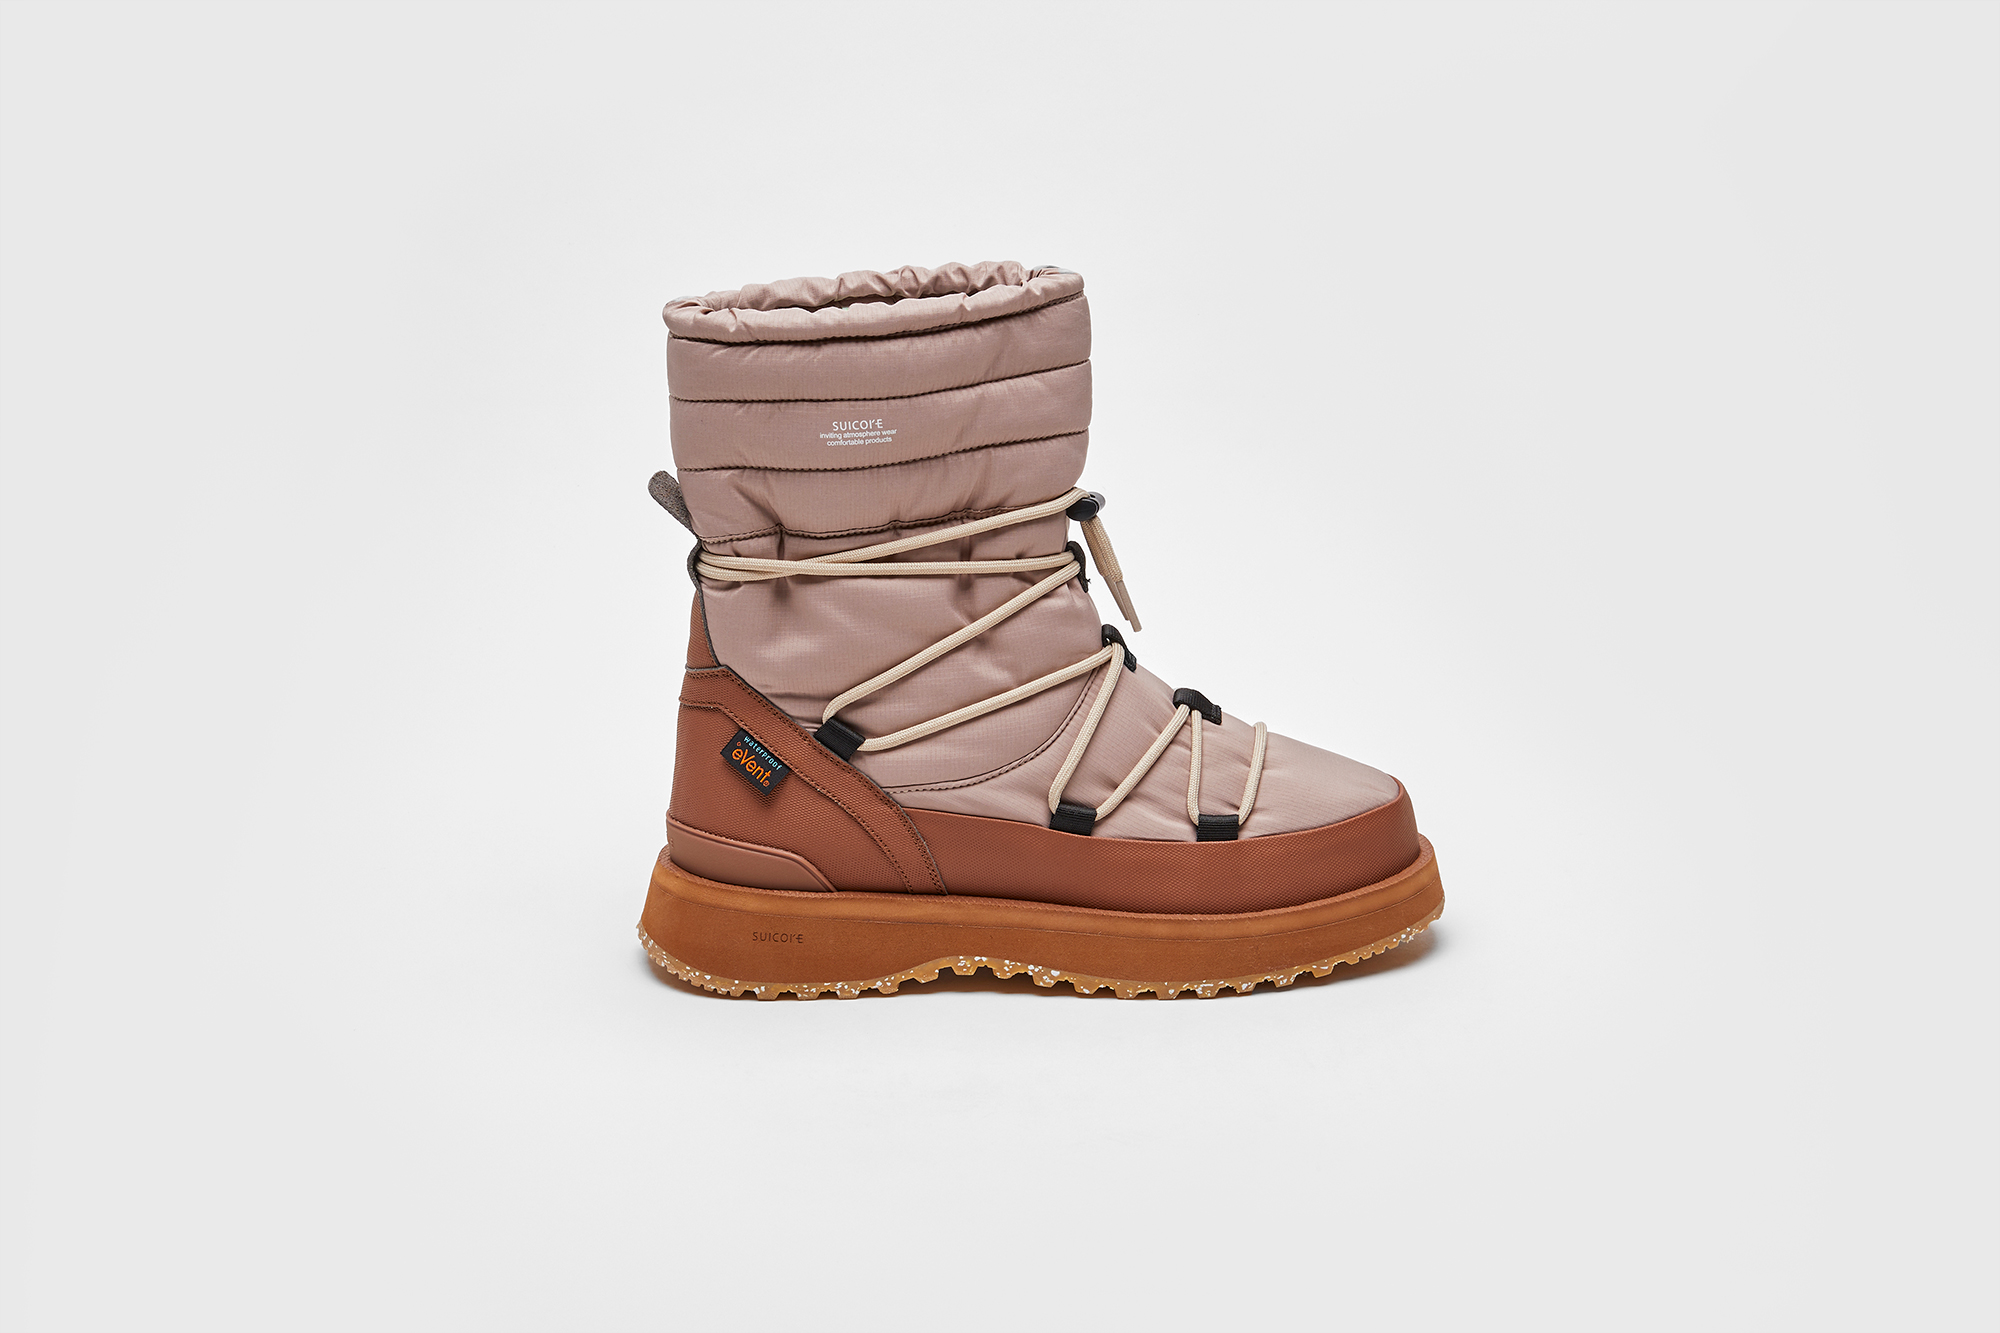 Suicoke's Fall/Winter '23 collection footwear